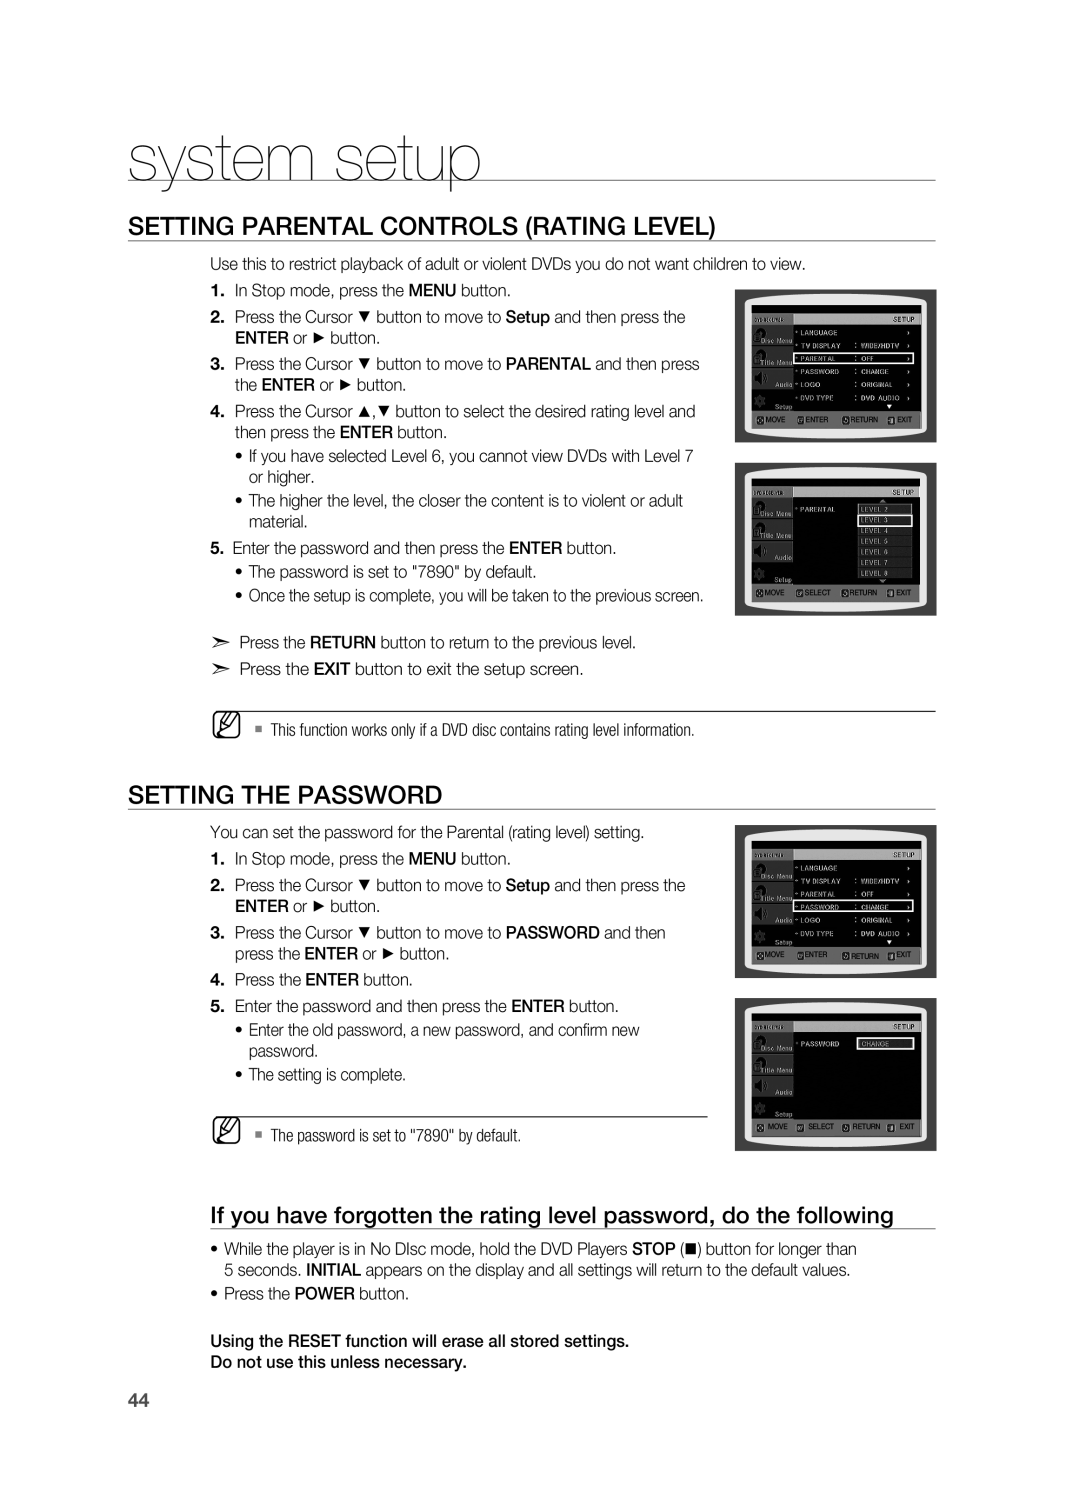 Samsung HT-X710 user manual Setting Parental Controls Rating Level, Setting the Password, system setup 